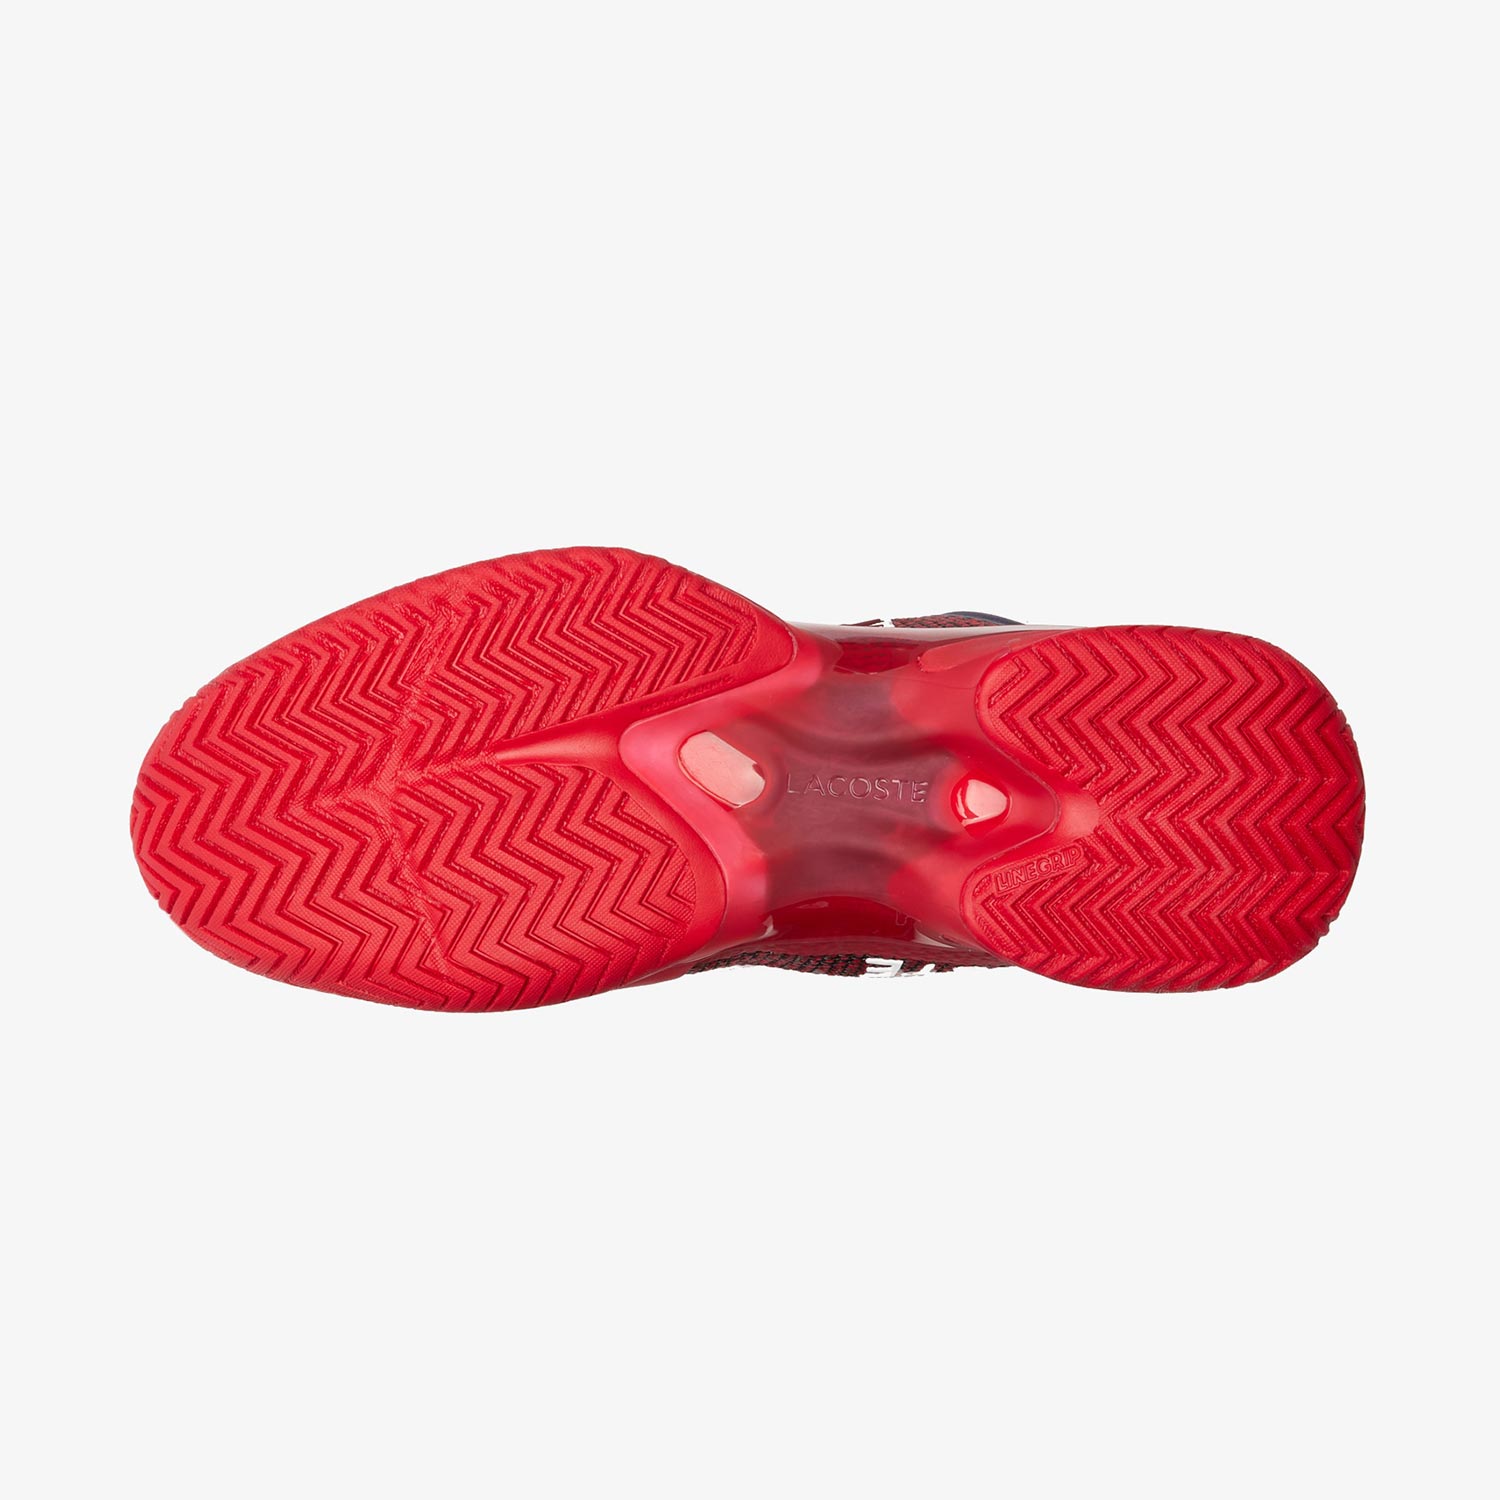 Lacoste AG-LT23 Ultra Men's Tennis Shoes - Red (2)